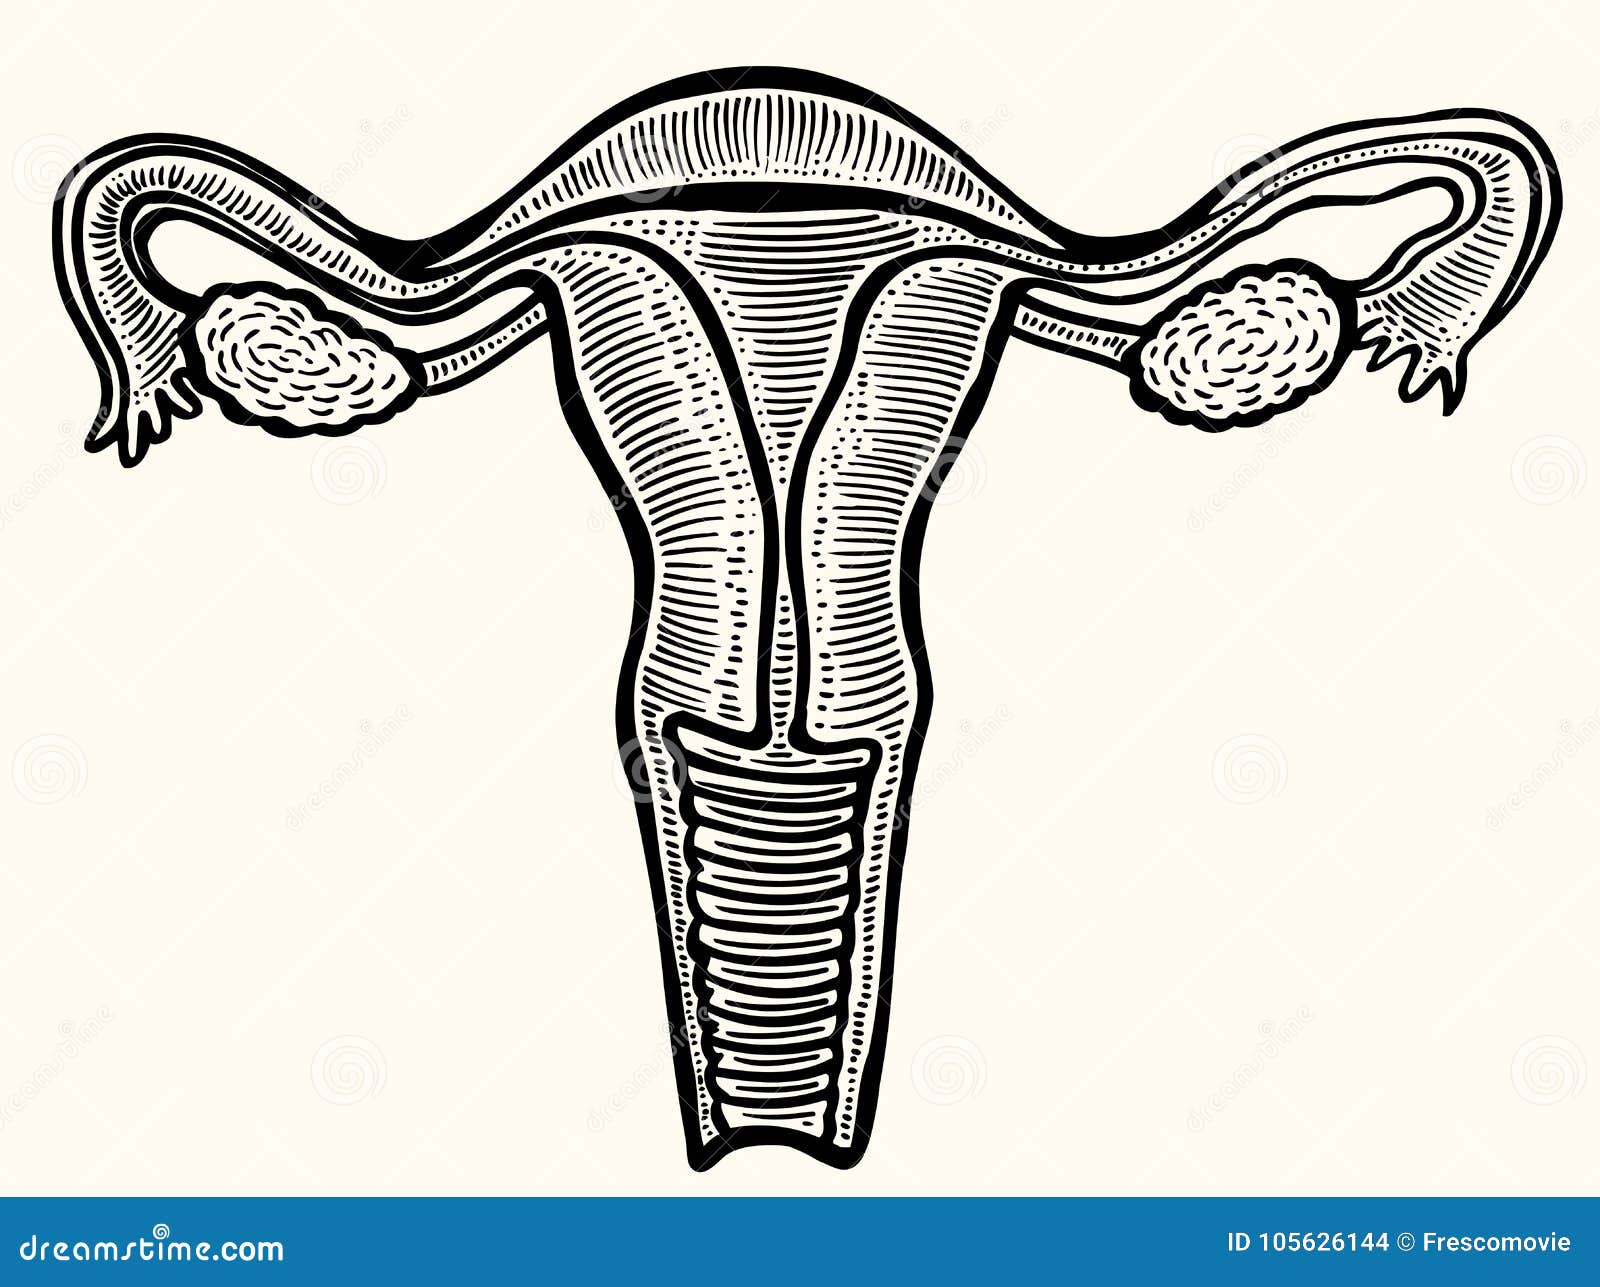 https://thumbs.dreamstime.com/z/medical-illustration-internal-sex-organs-woman-uterus-ovaries-folopytic-tubes-drawn-style-engraving-vector-beige-105626144.jpg